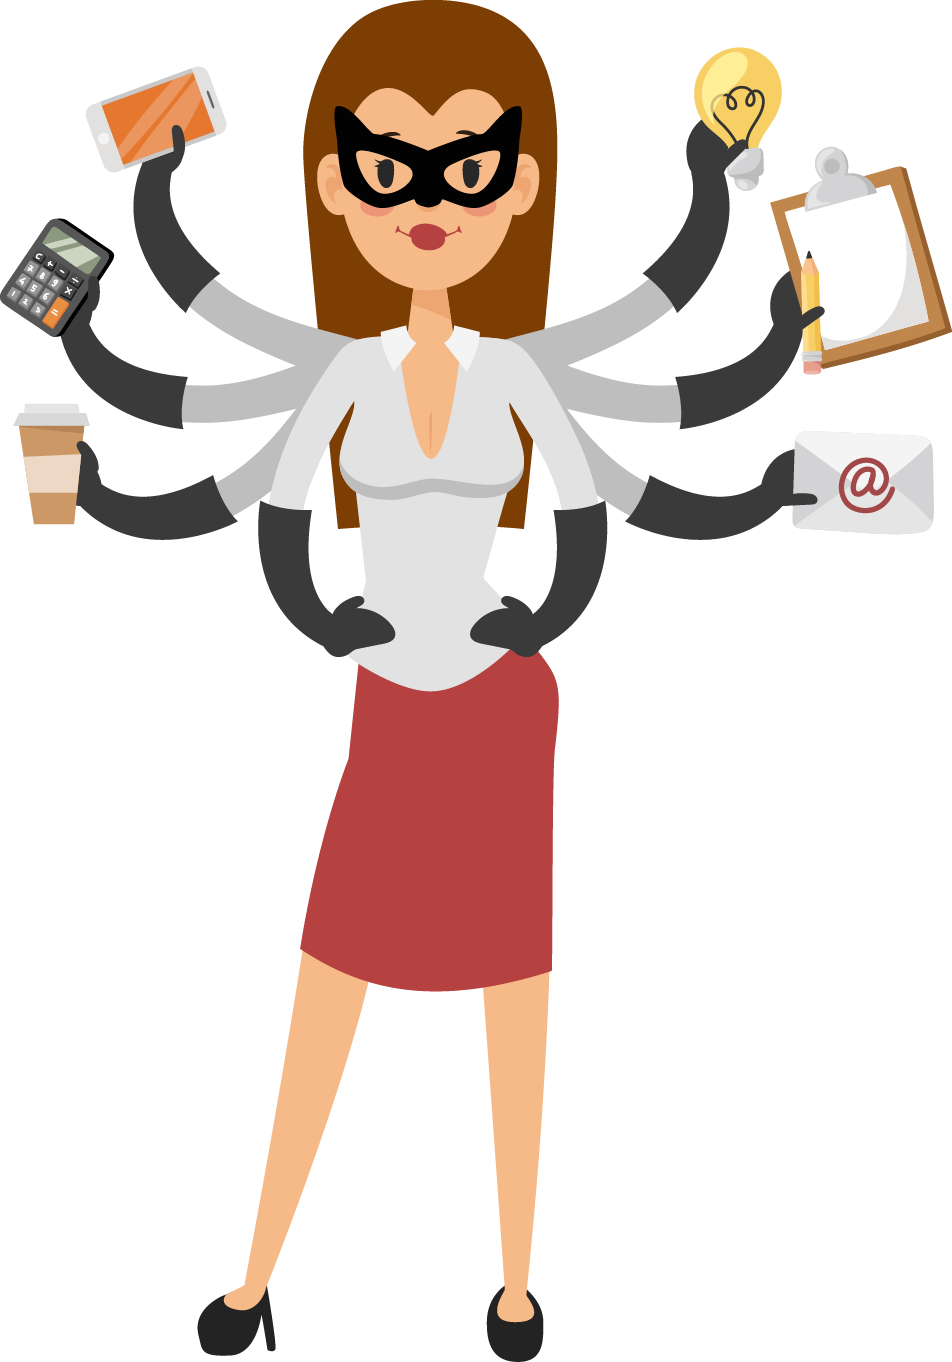 Secretaries Conference - Business Woman Super Hero (952x1362)